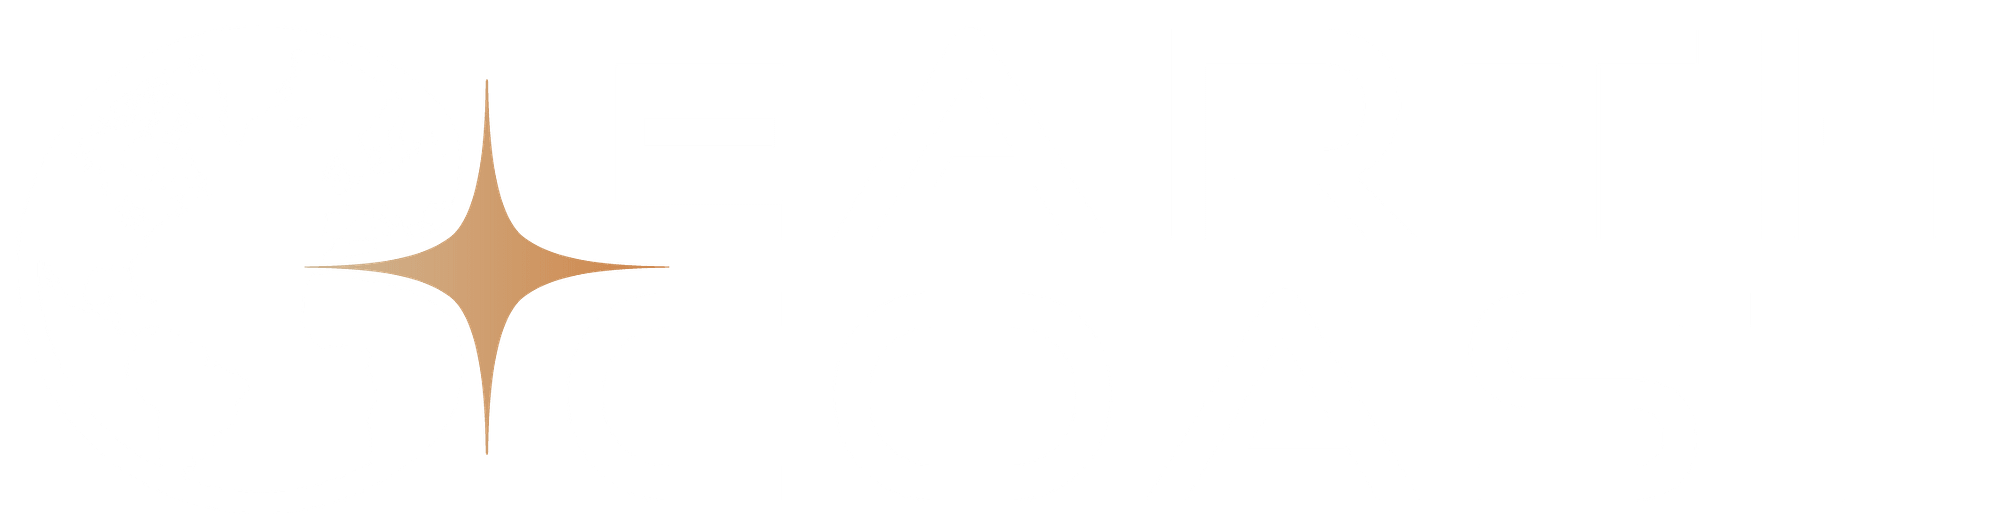 Earth Coast Logo - Main White